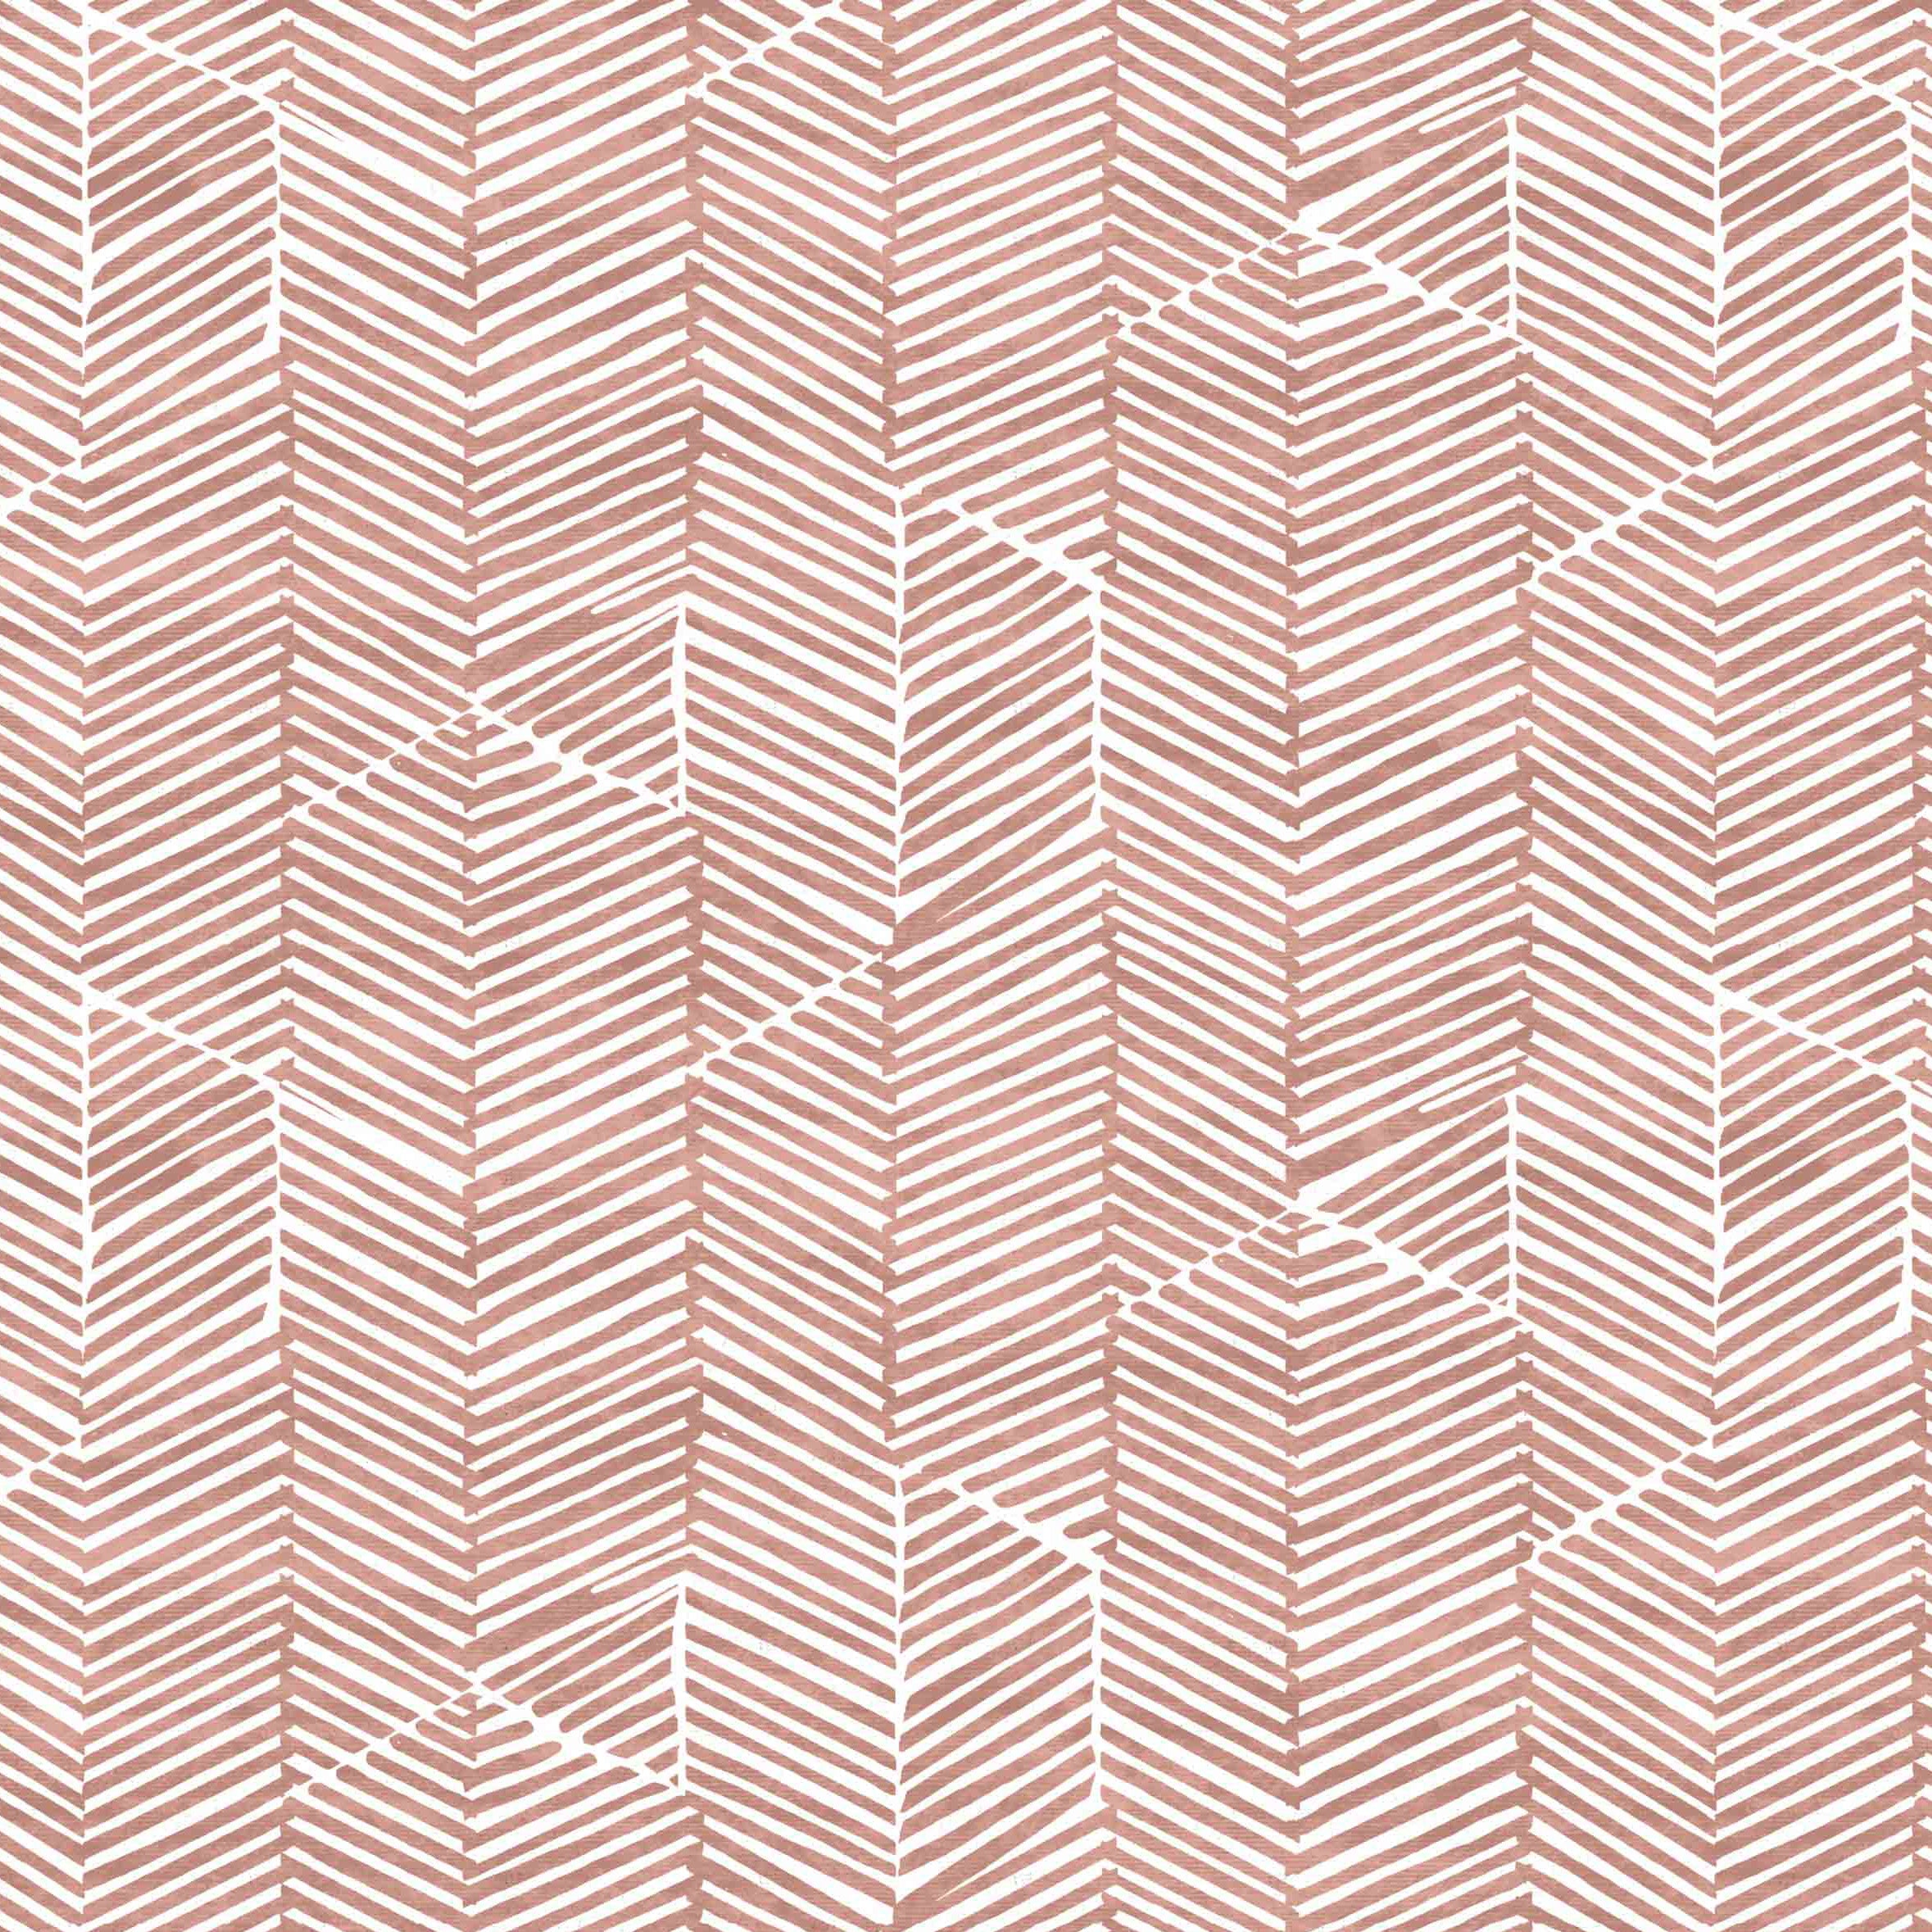 Detail of fabric in a dense herringbone print in brown on a white field.